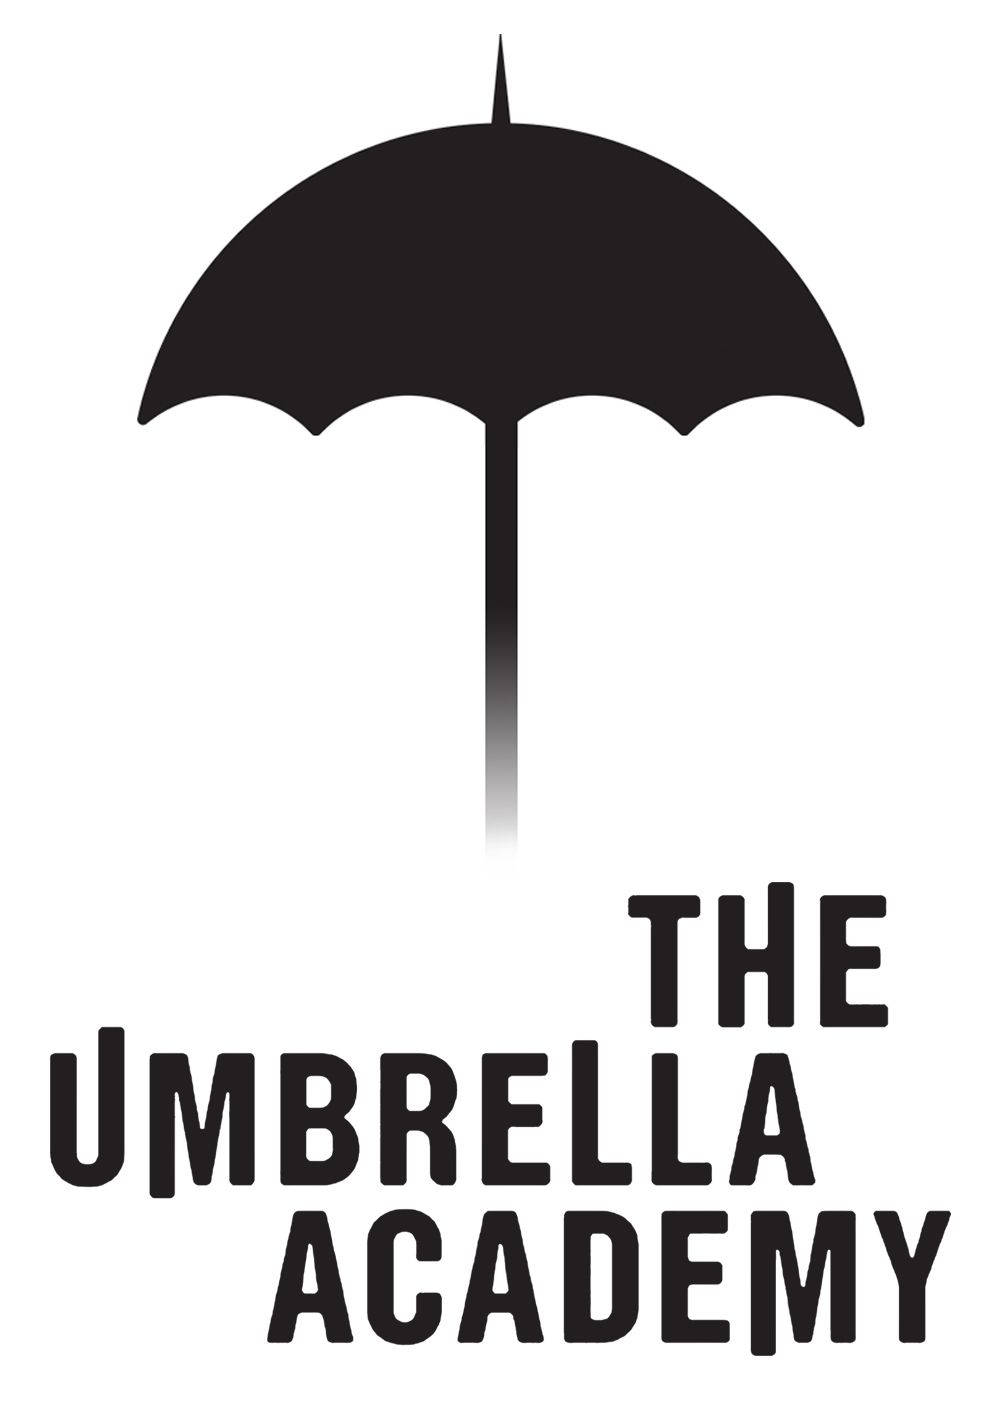 Unite! The Umbrella Academy Wallpaper